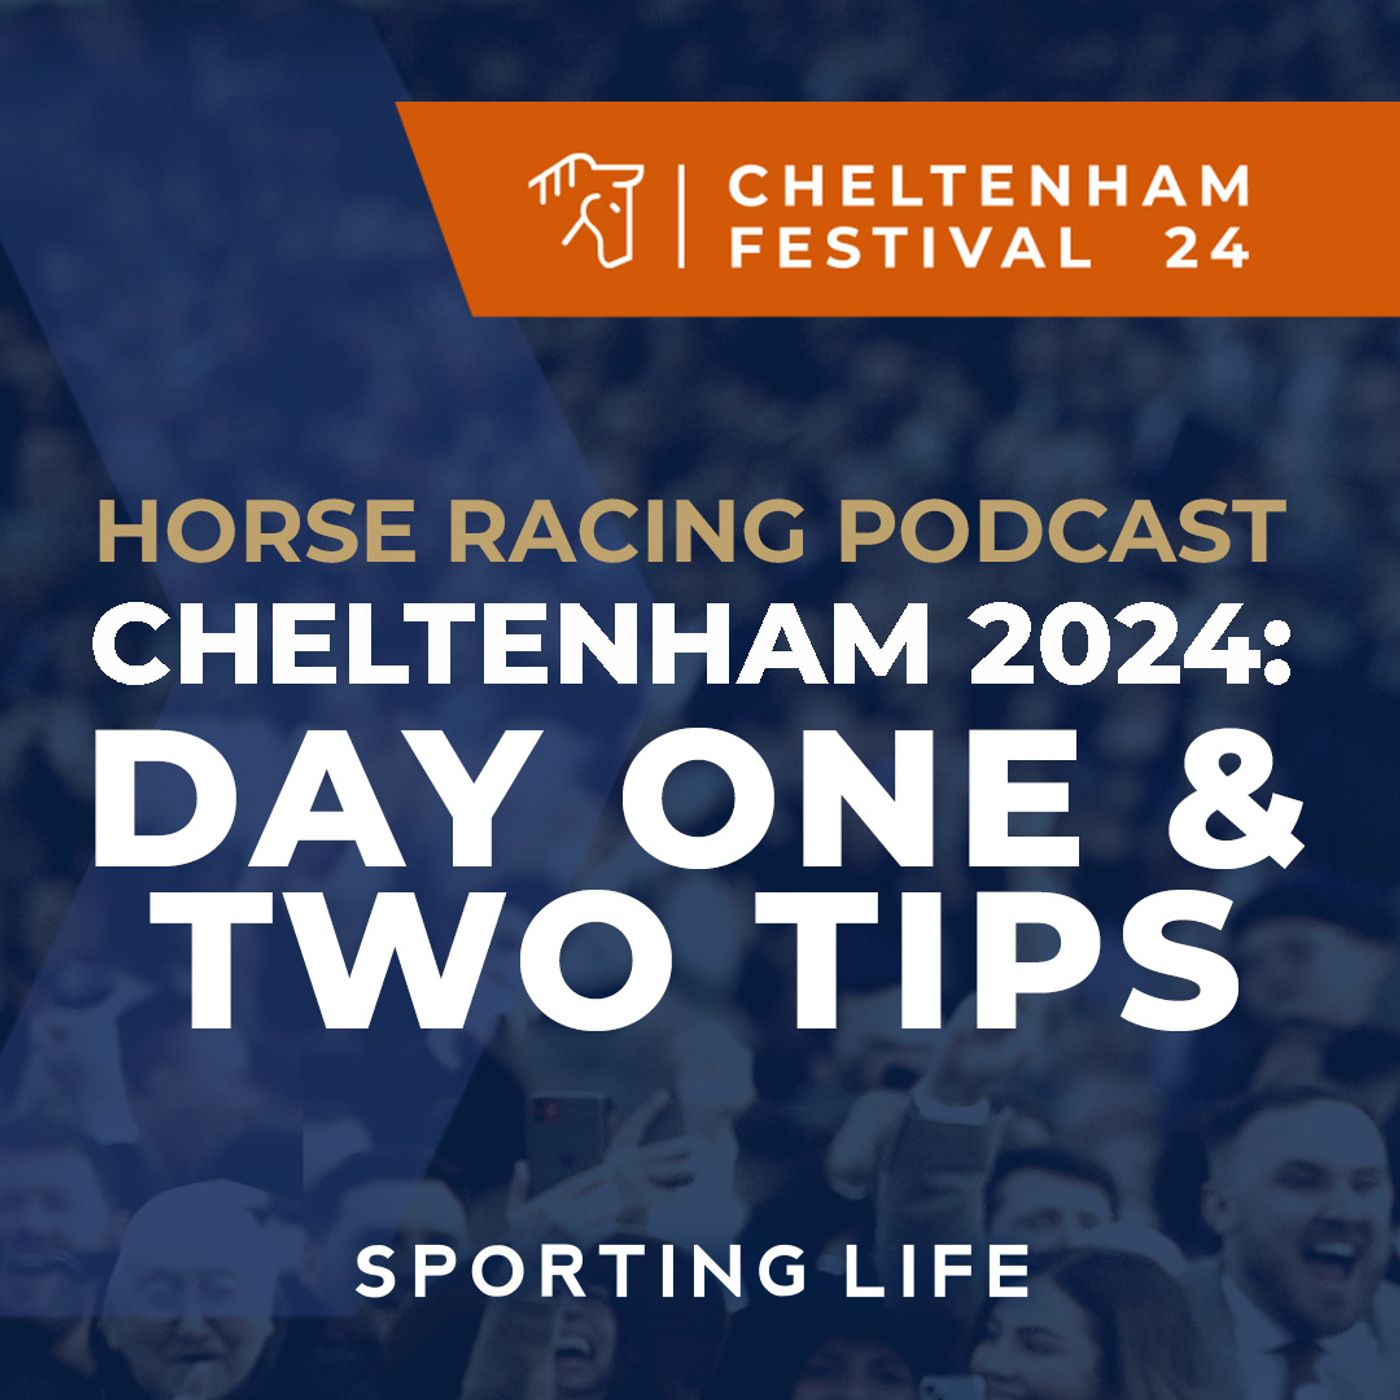 Horse Racing Podcast: Cheltenham Festival Day One & Two tips